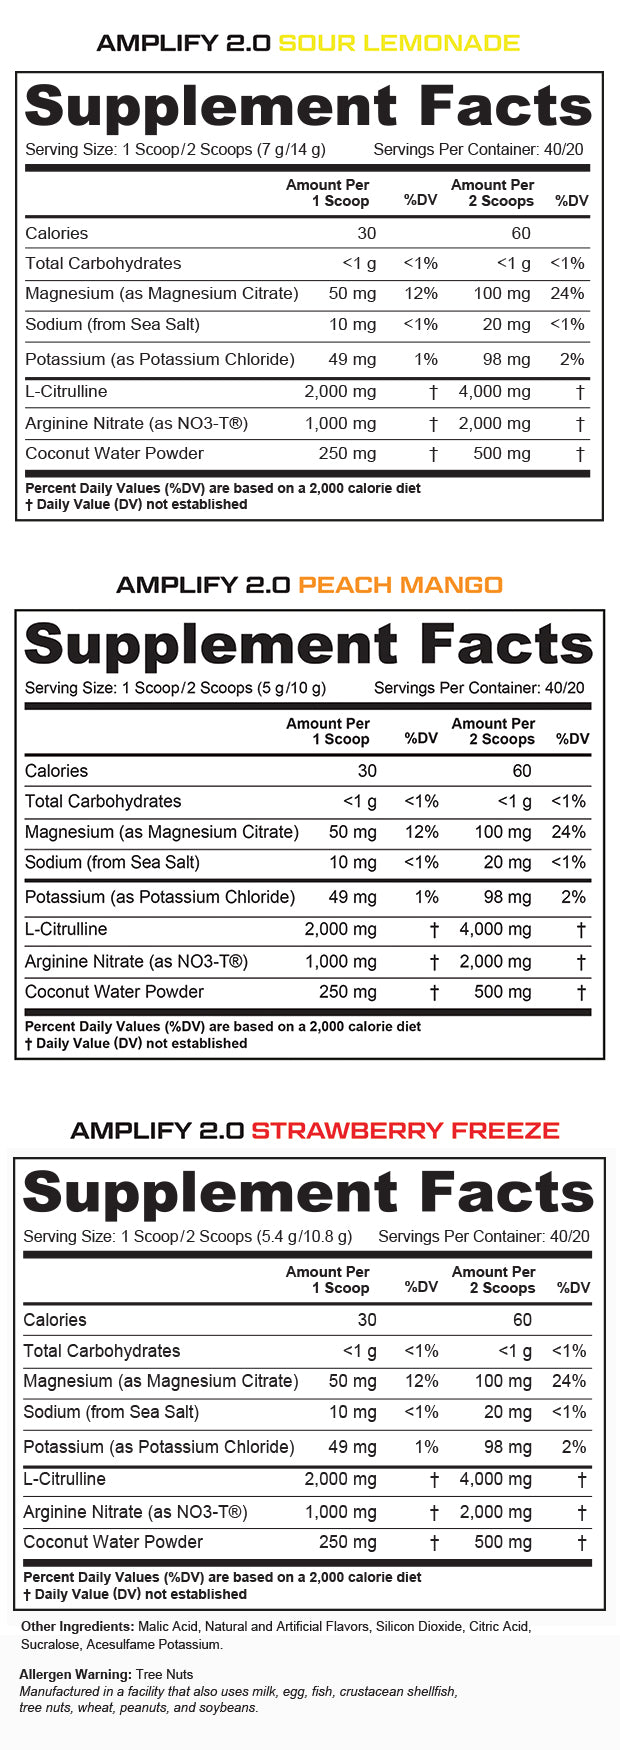 AMPLIFY 2.0 Caffeine Free Pre Workout Supplement –